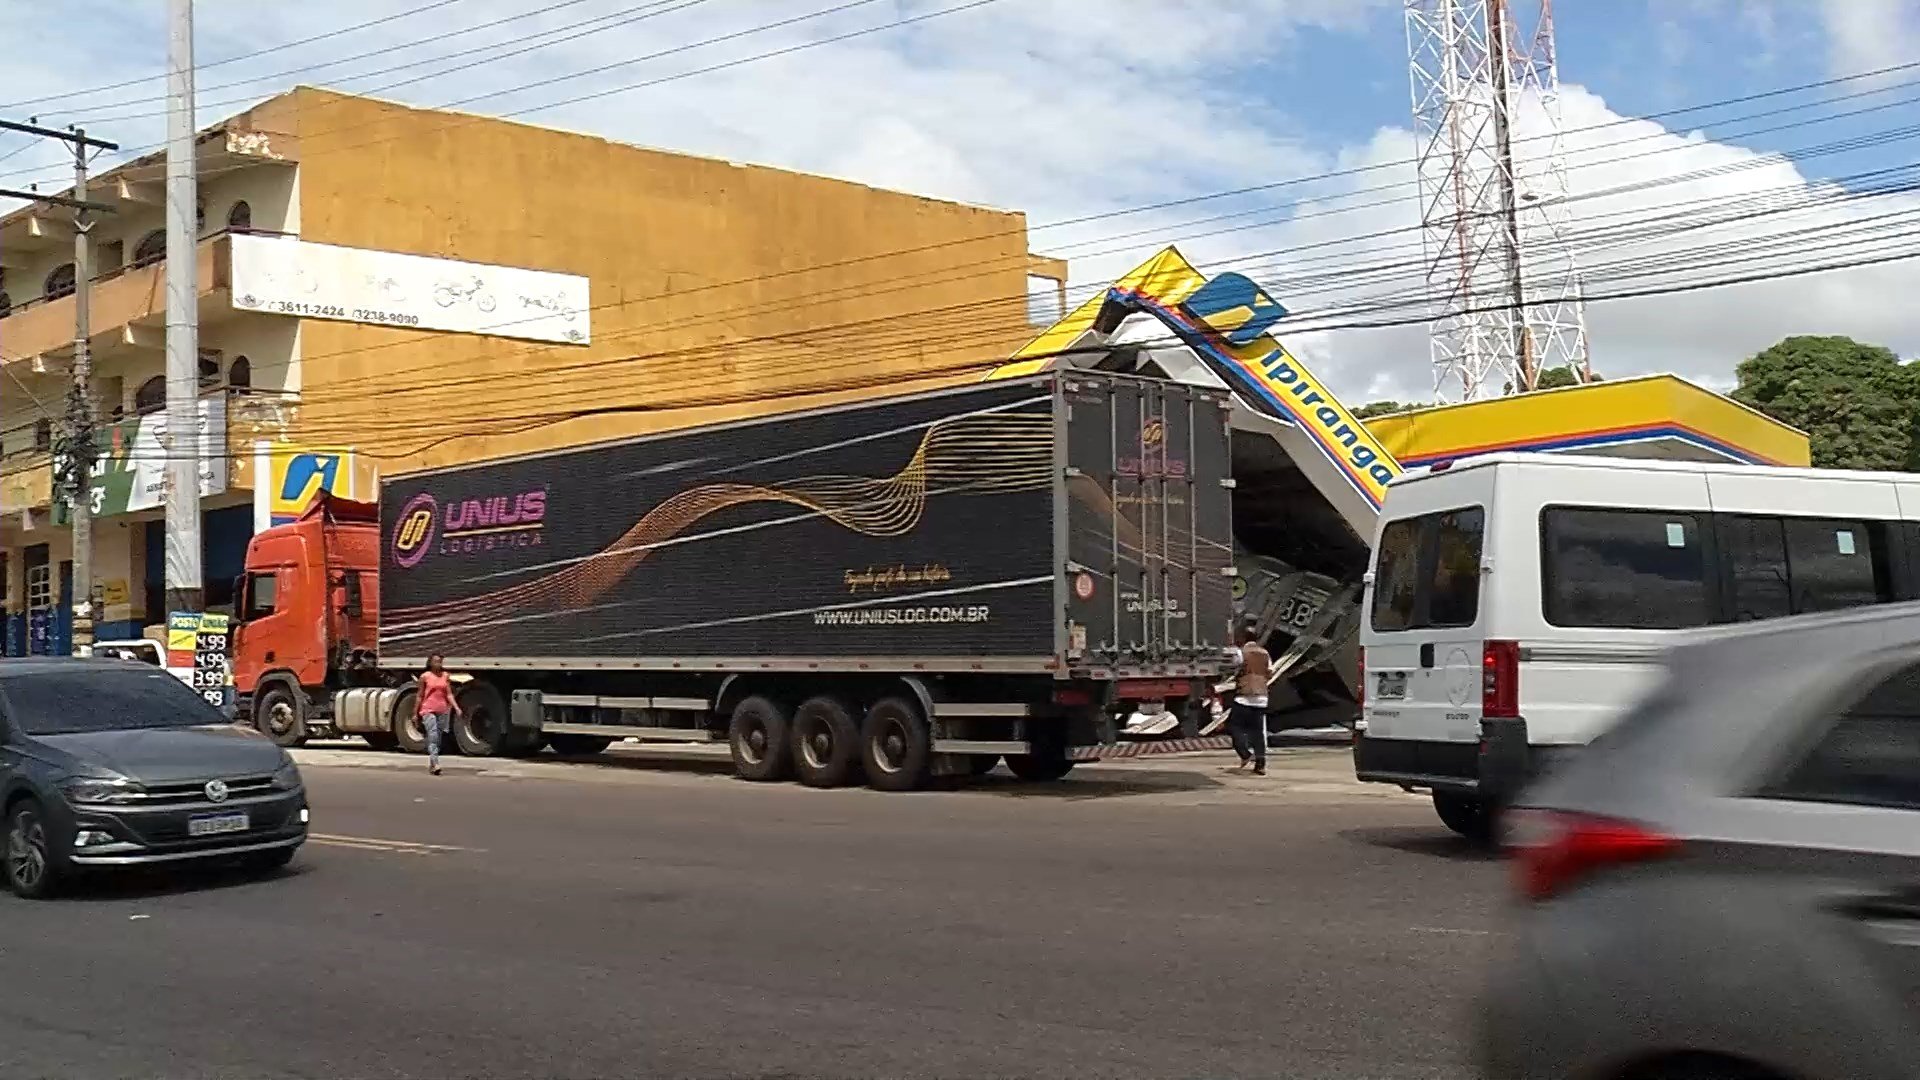 Carreta derruba cobertura de posto de combustíveis na Zona Sul de Manaus 